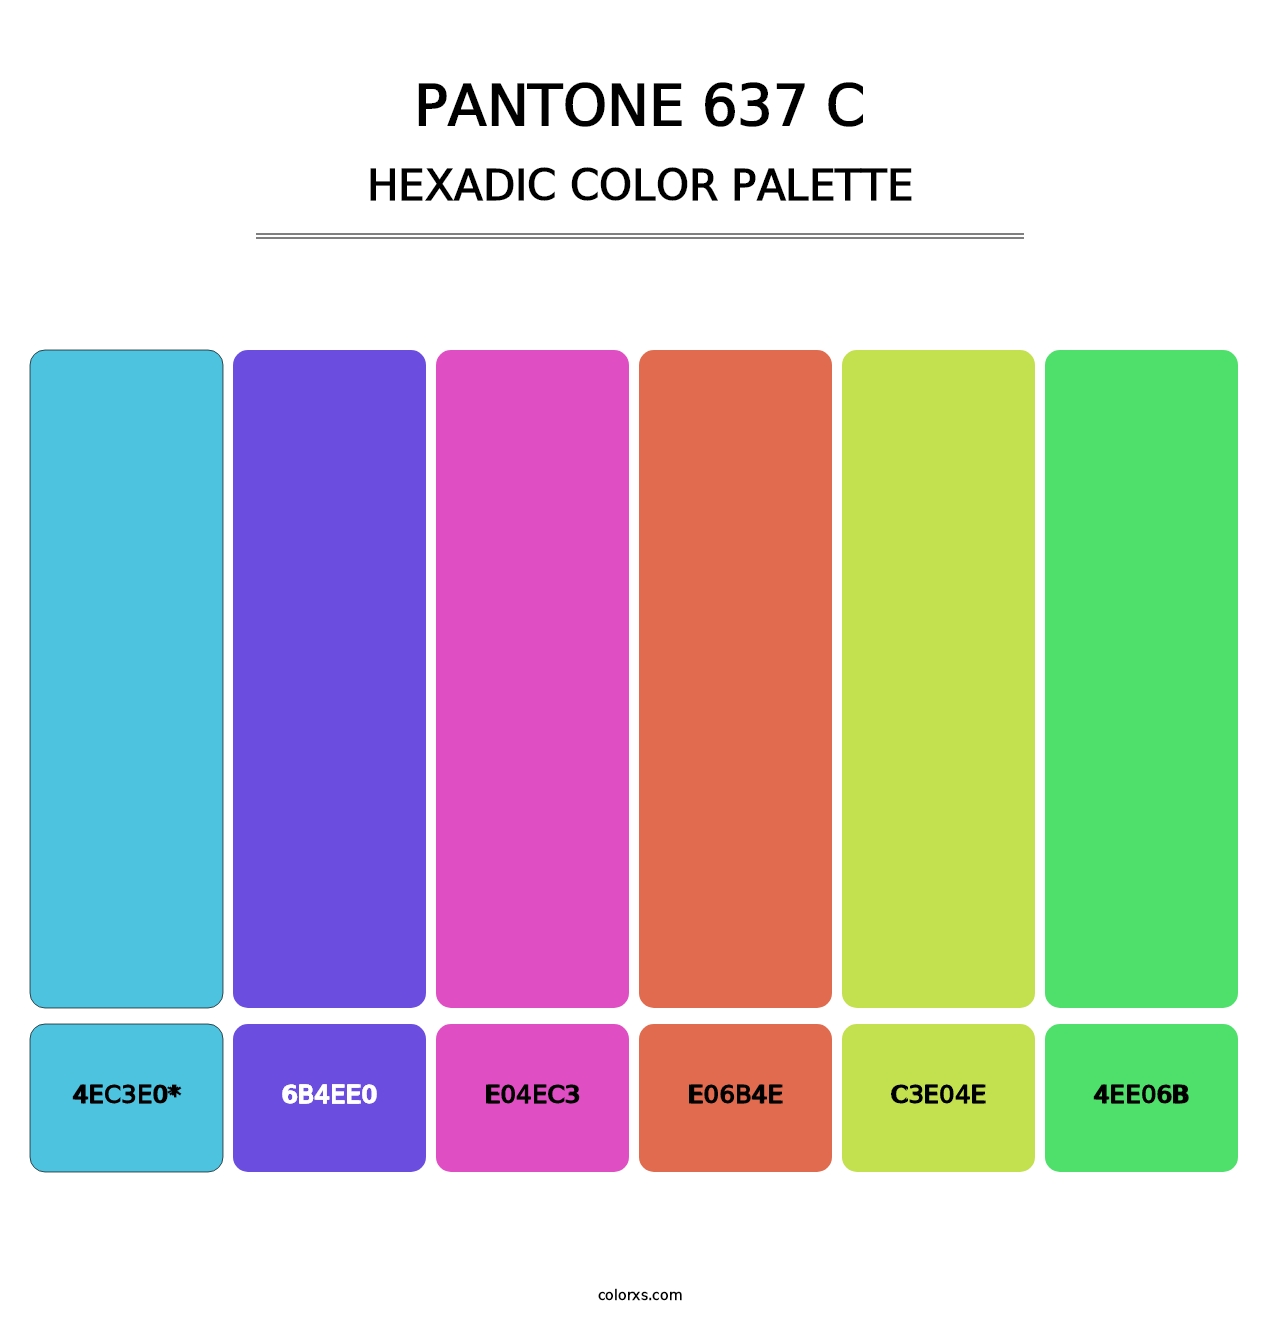 PANTONE 637 C - Hexadic Color Palette